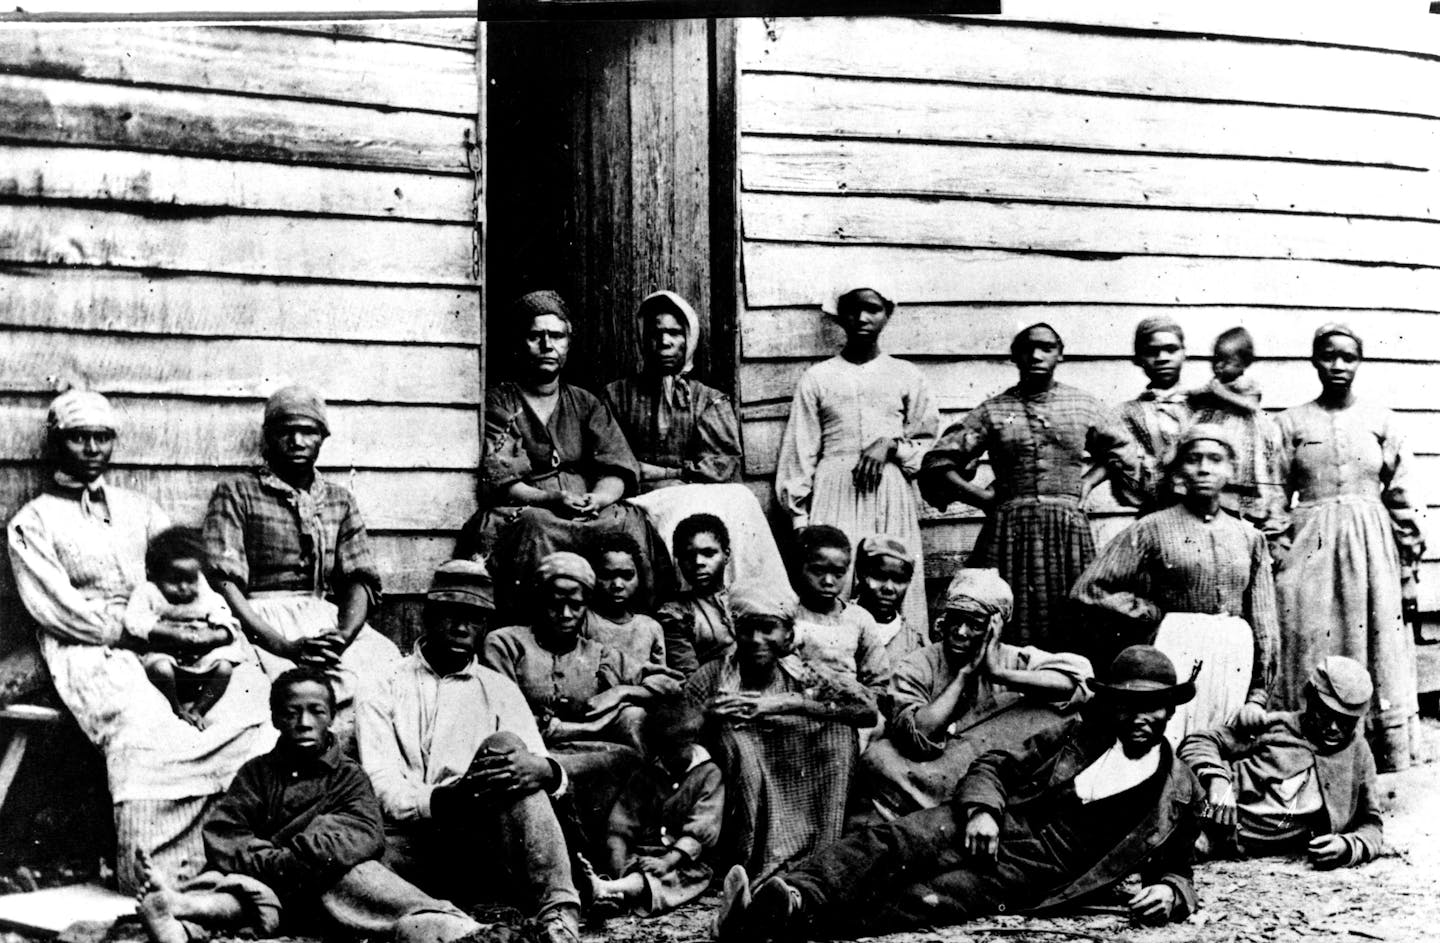 1860. People enslaved on a plantation in South Carolina.